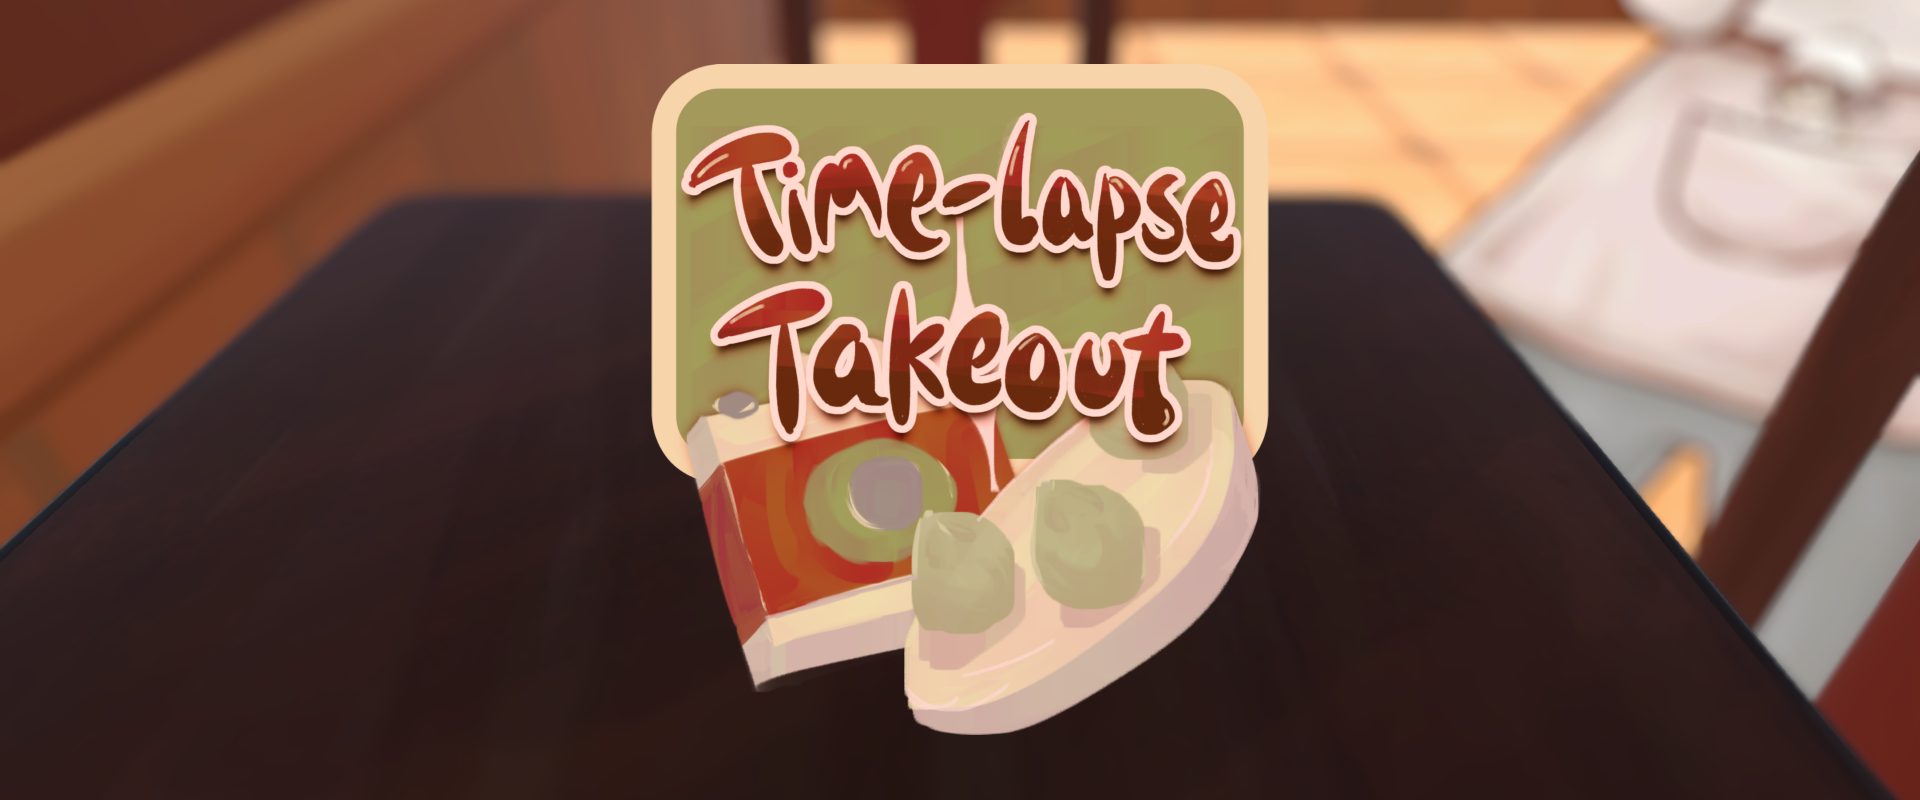 Time-lapse Takeout